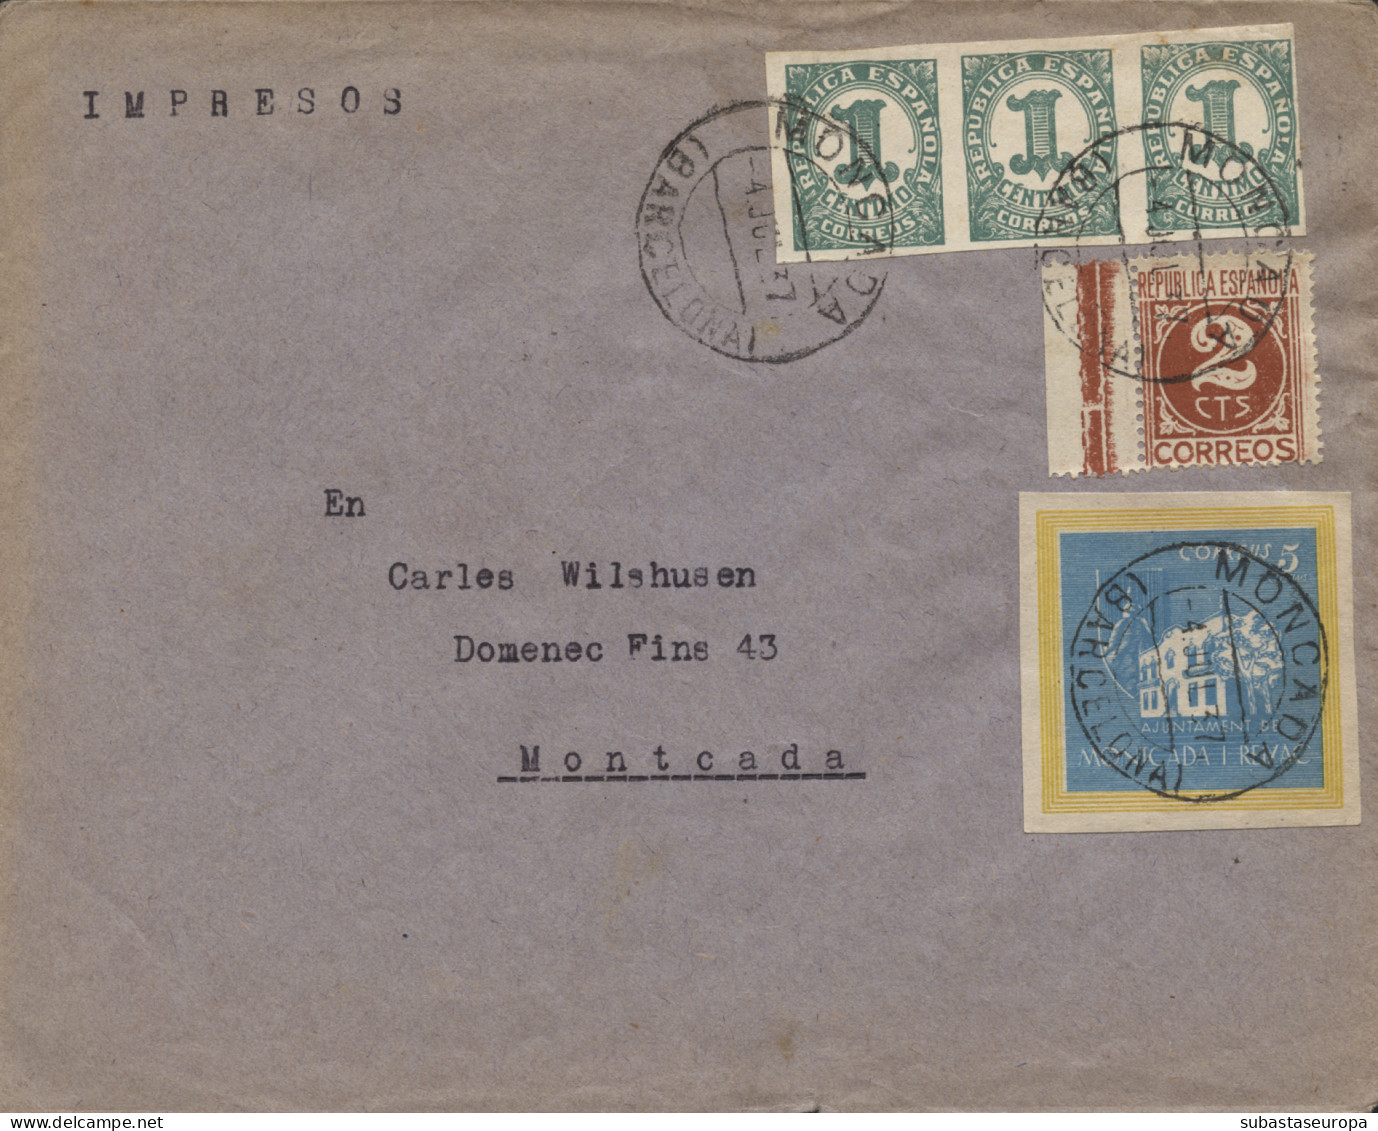 Carta Franqueada Con Viñeta De Montcada, Año 1937. - Marques De Censures Républicaines